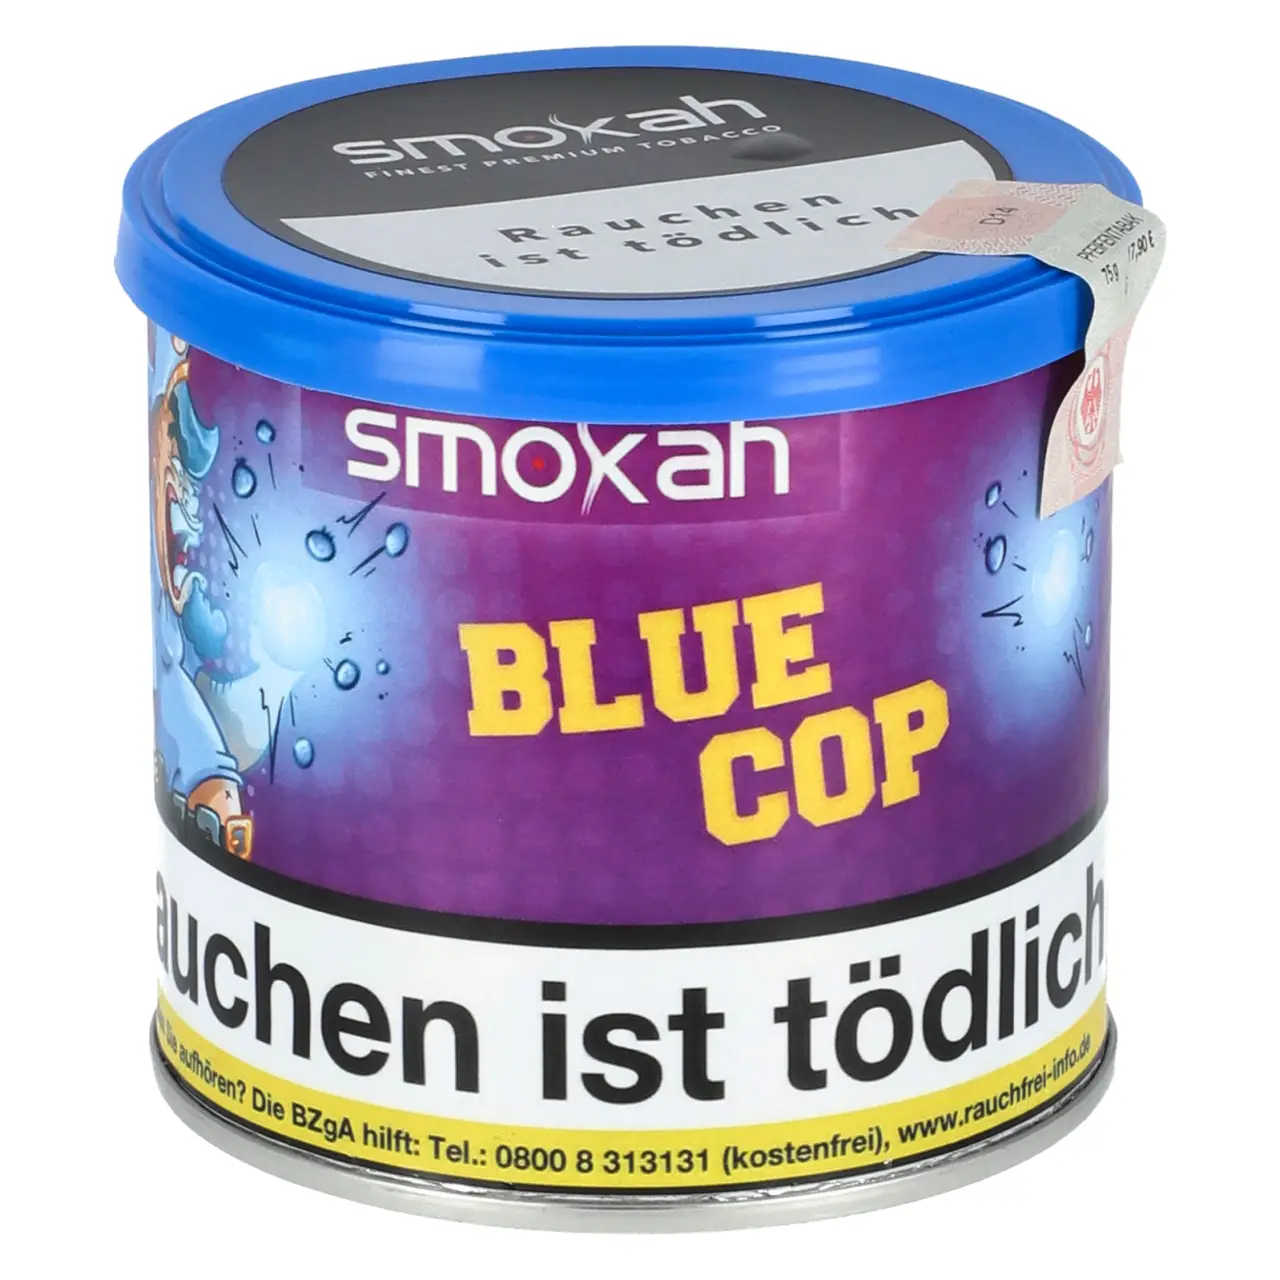 Smokah Blue Cop Pfeifentabak - Blaubeere Geschmack - 75g Dose